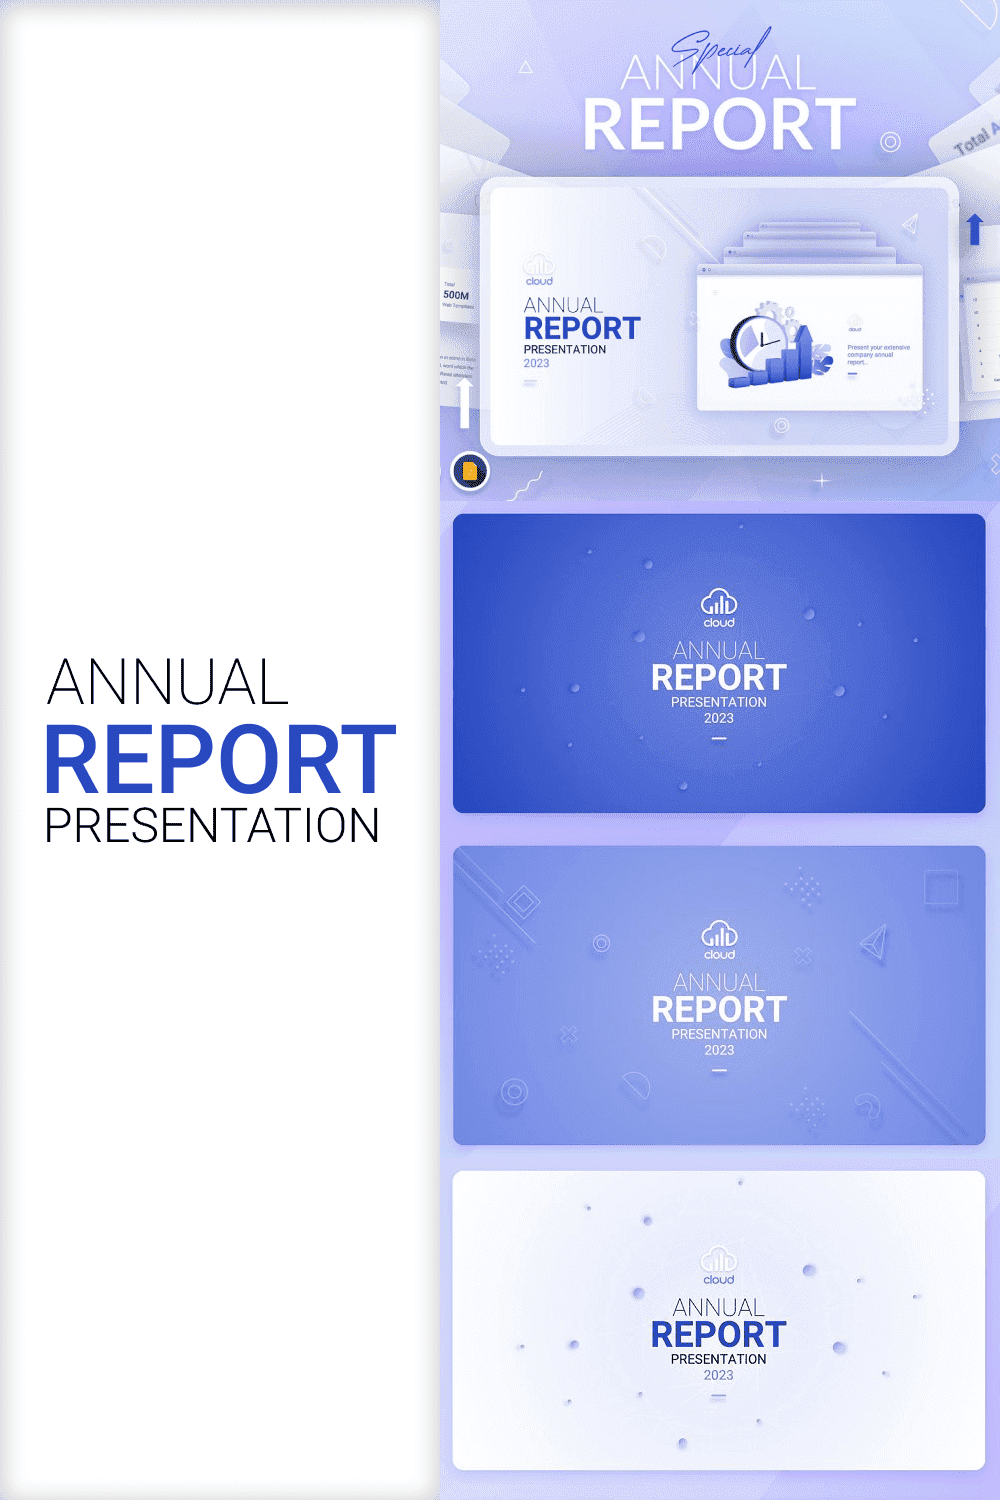 Annual Report Presentation - Preview.